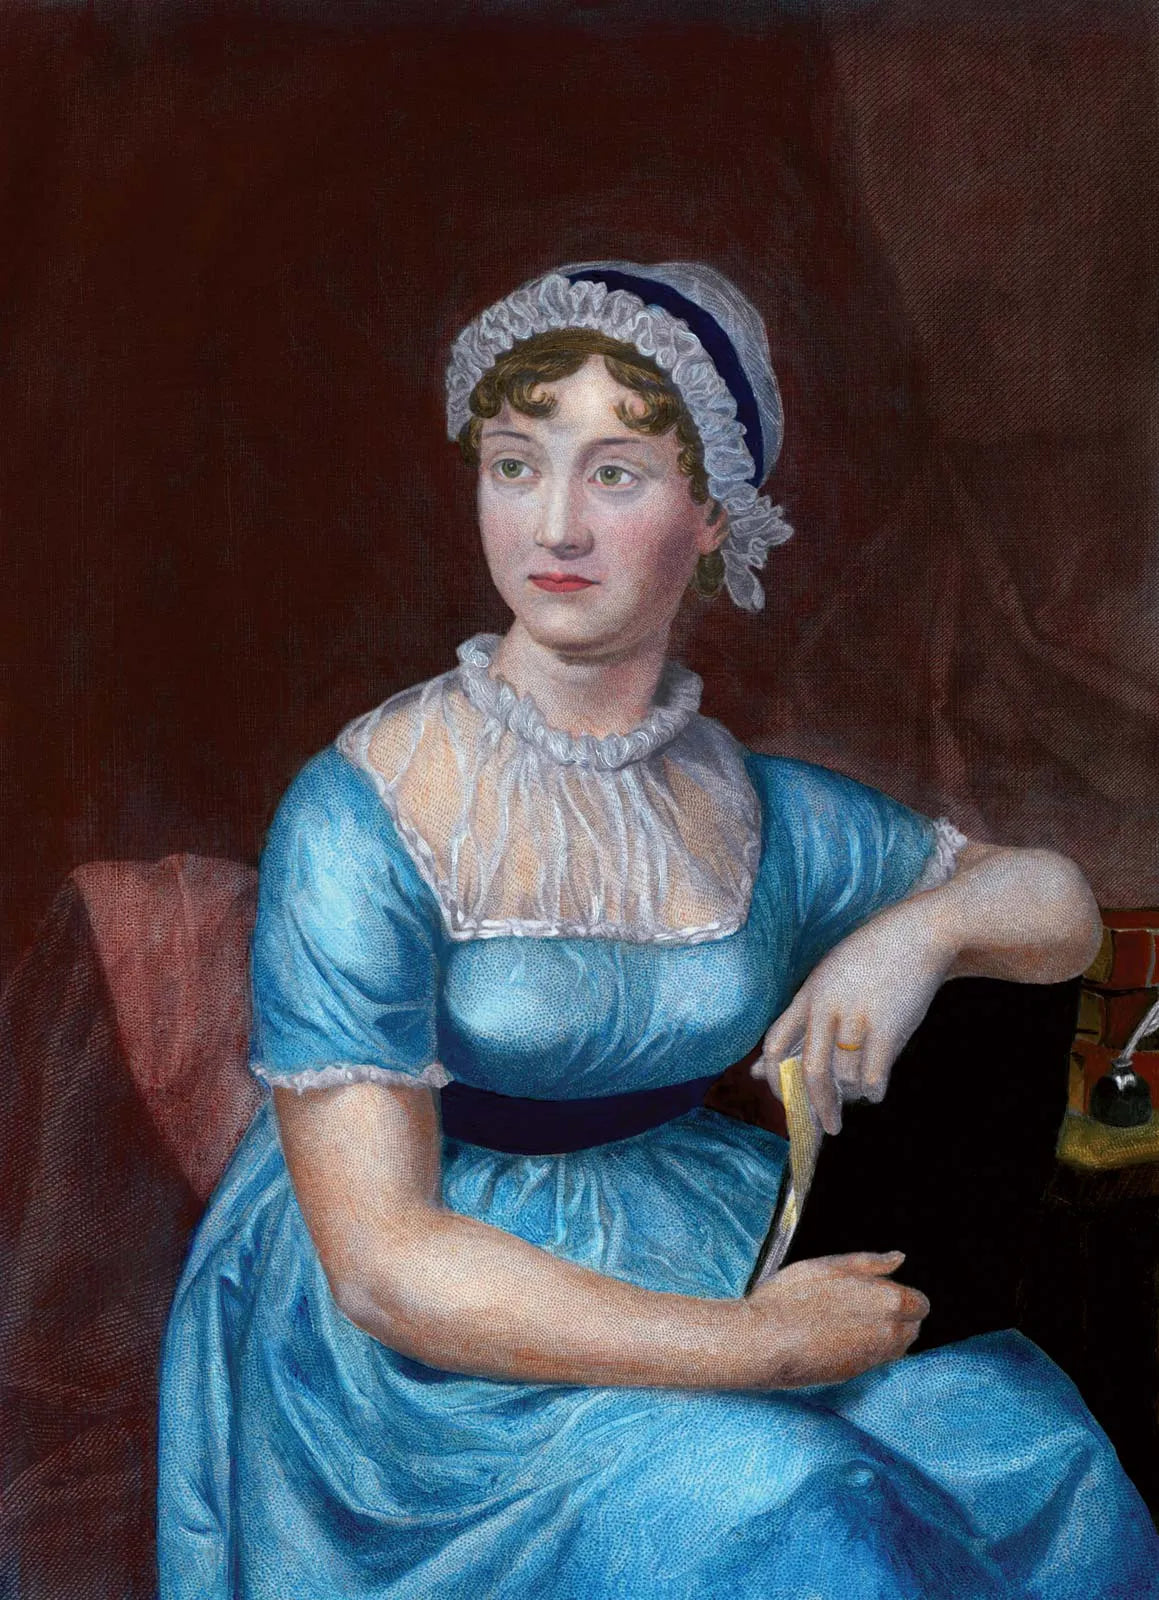 Jane Austen audiobook author